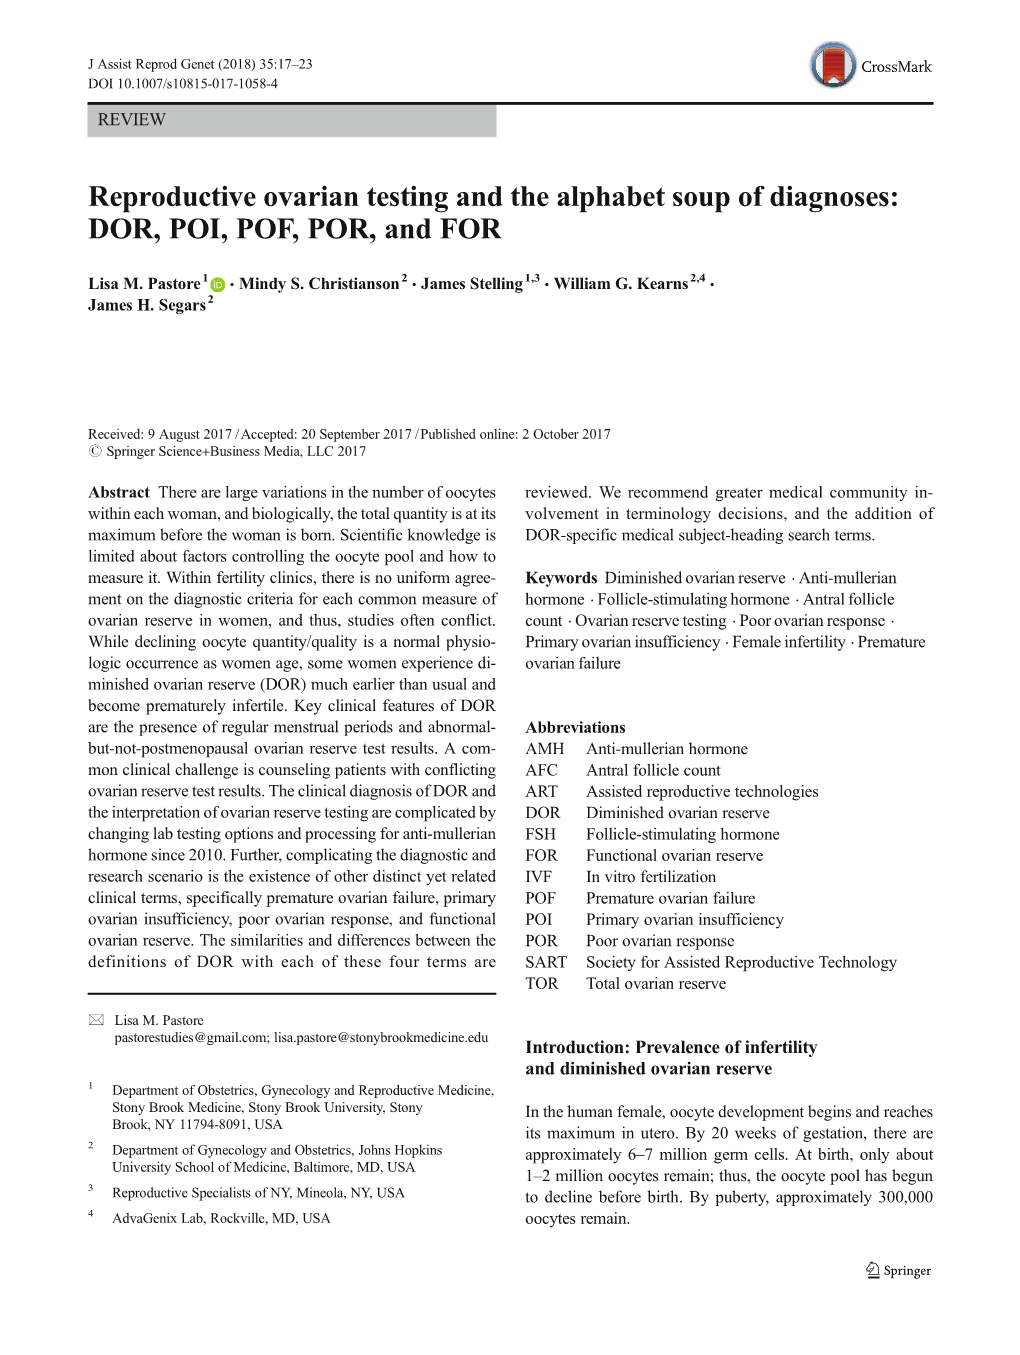 Reproductive Ovarian Testing and the Alphabet Soup of Diagnoses: DOR, POI, POF, POR, and FOR